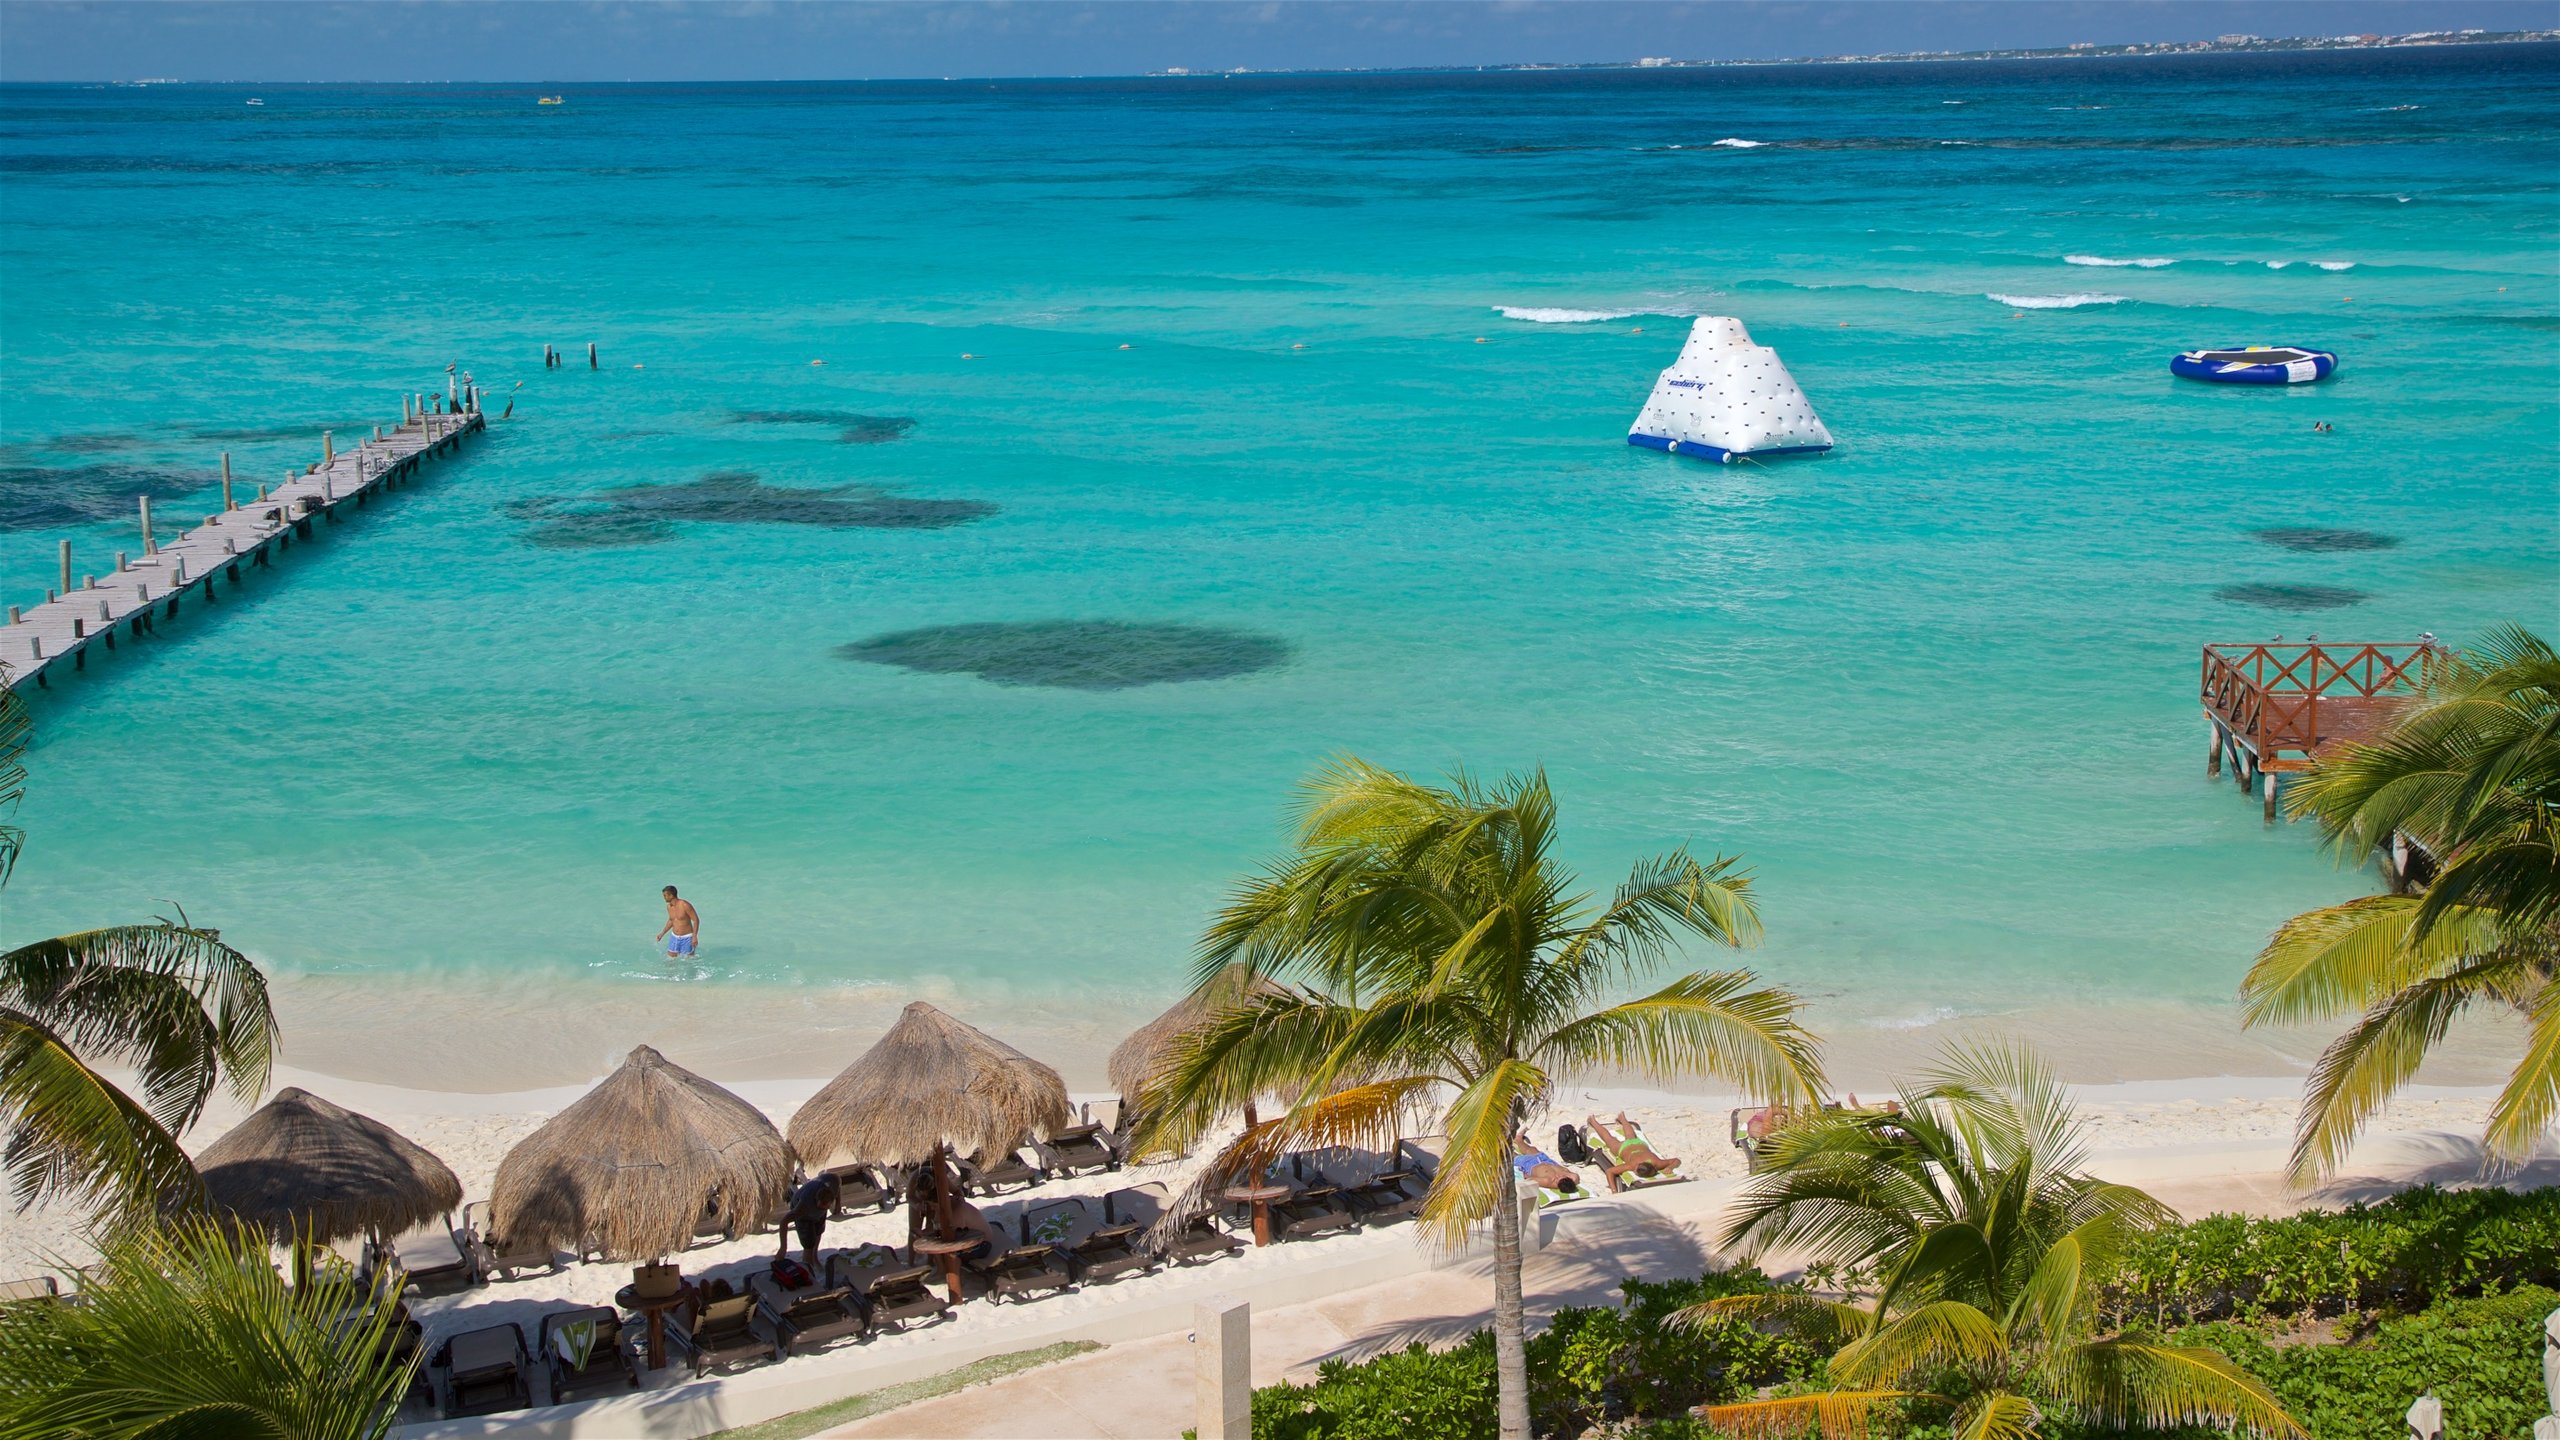 Cancun got the best beaches in the world